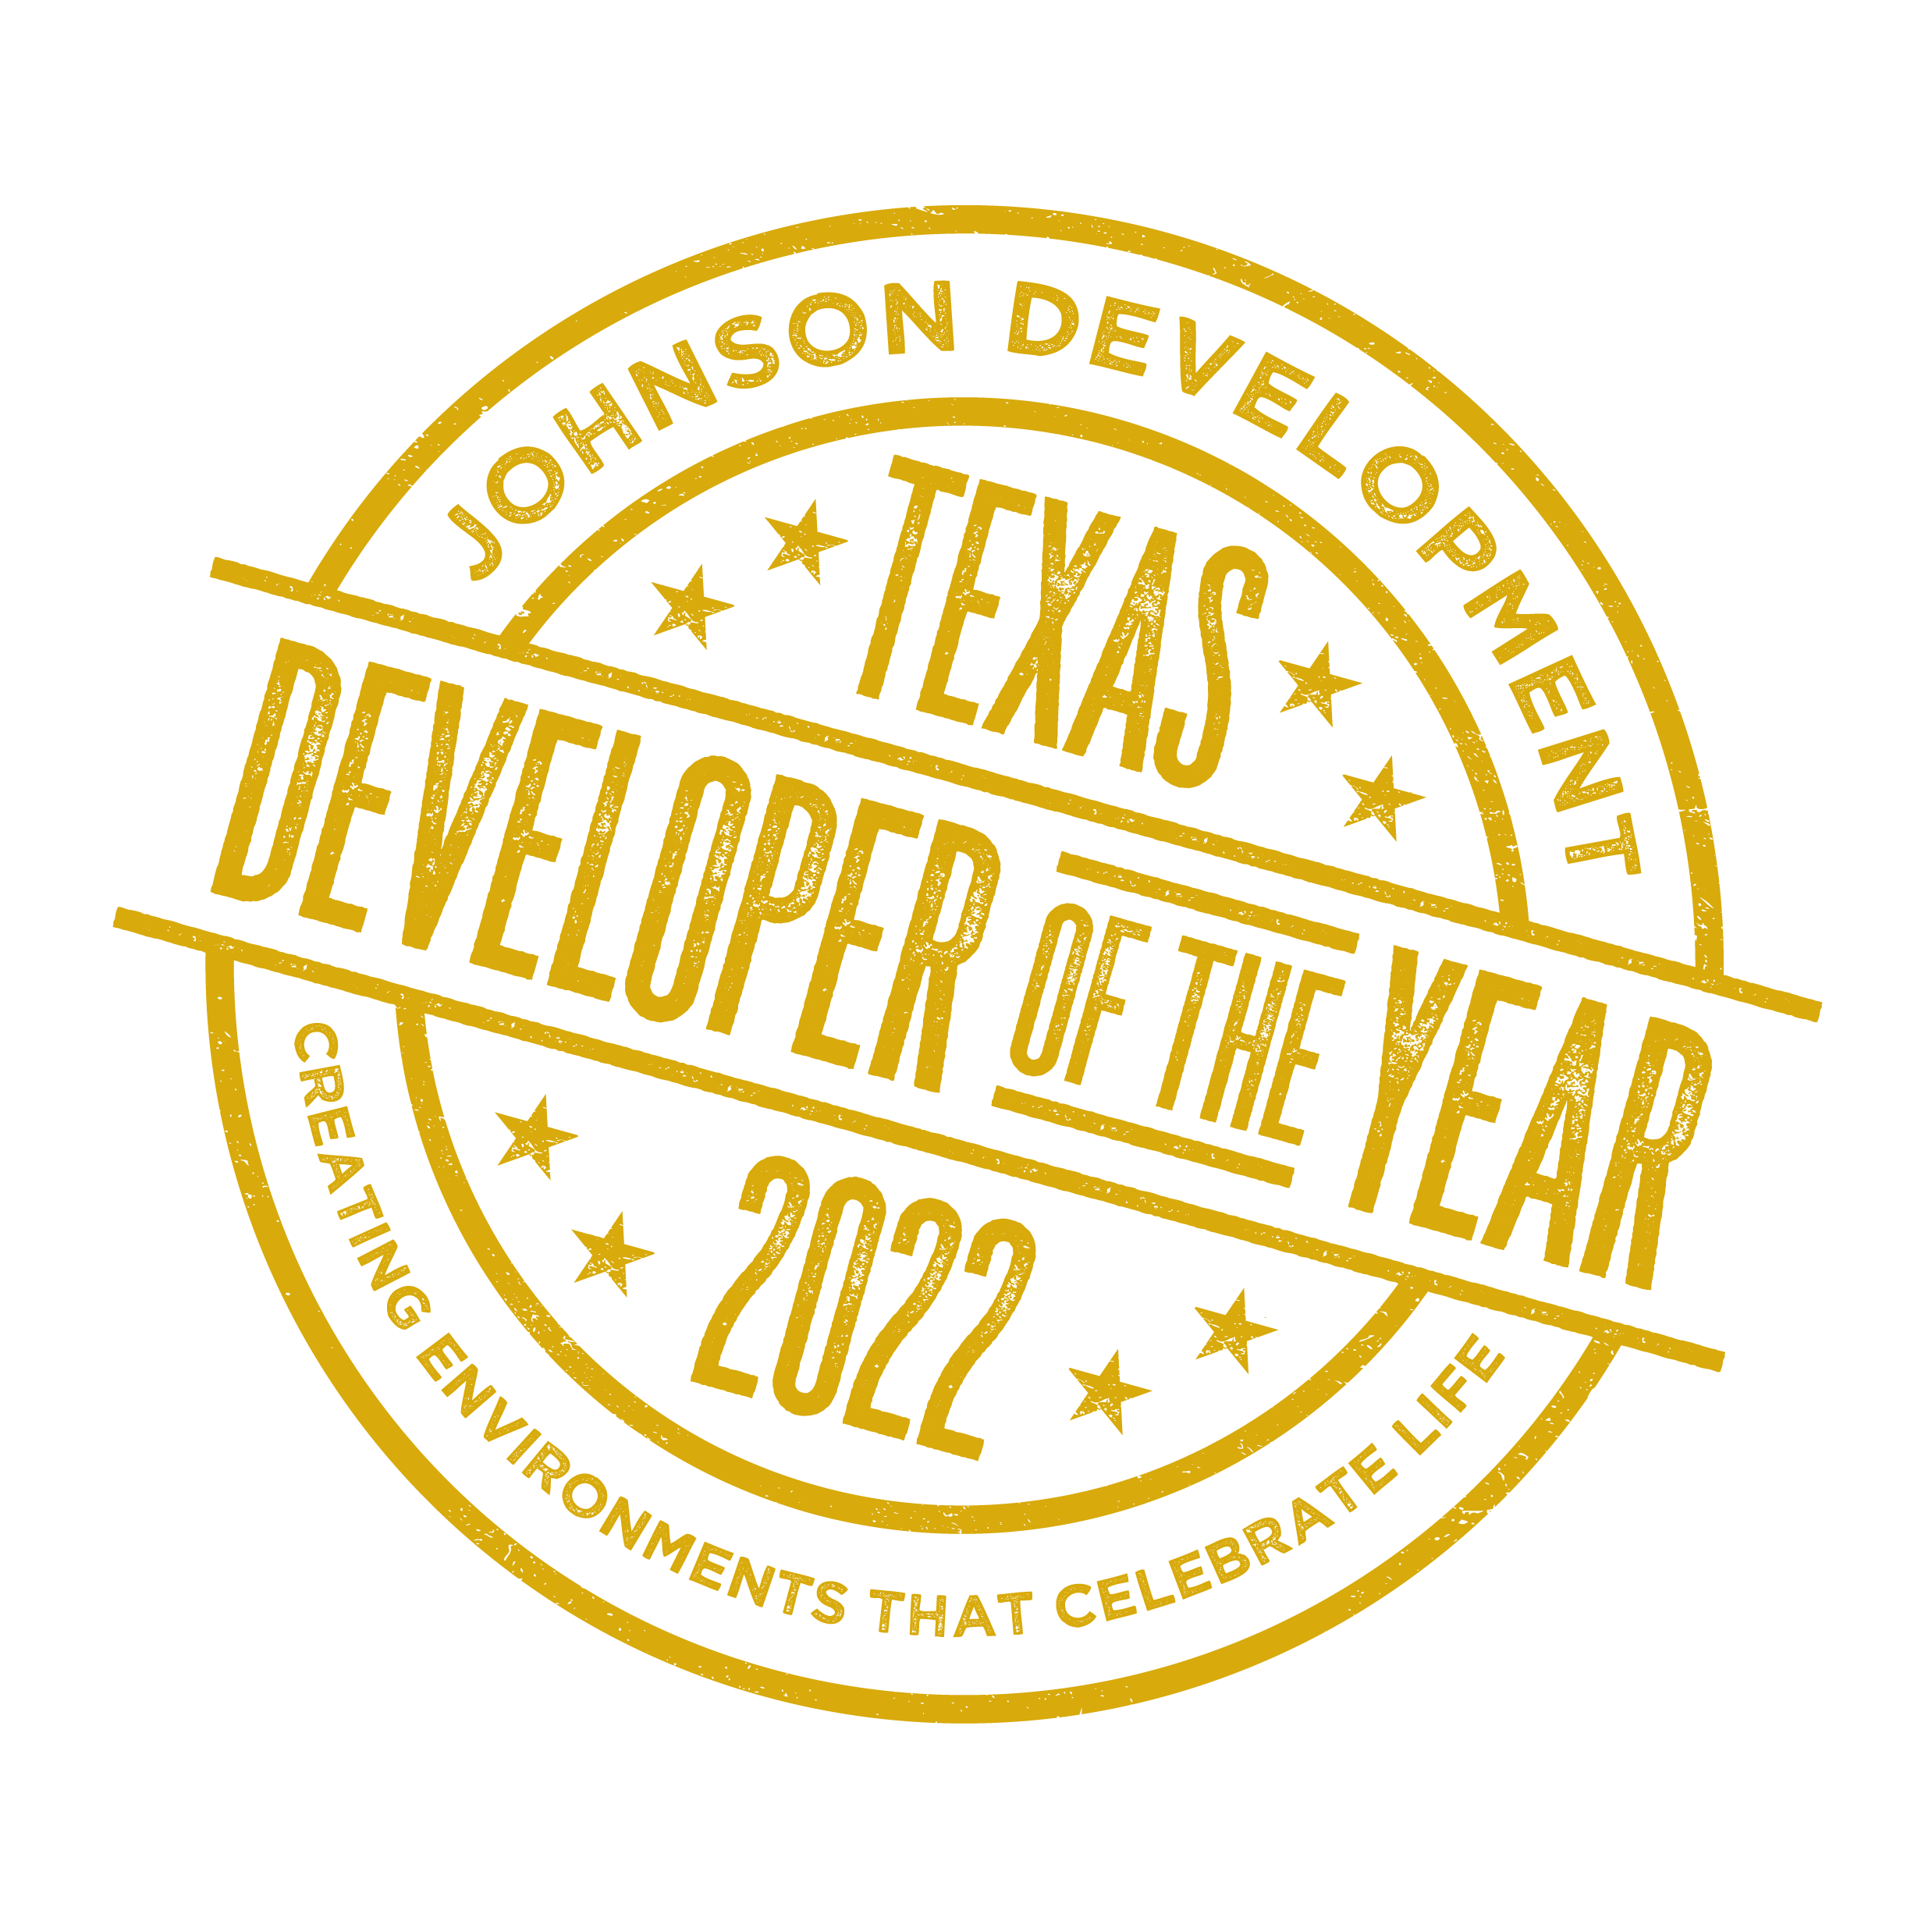 Johnson Development Texas Developer of the Year 2020